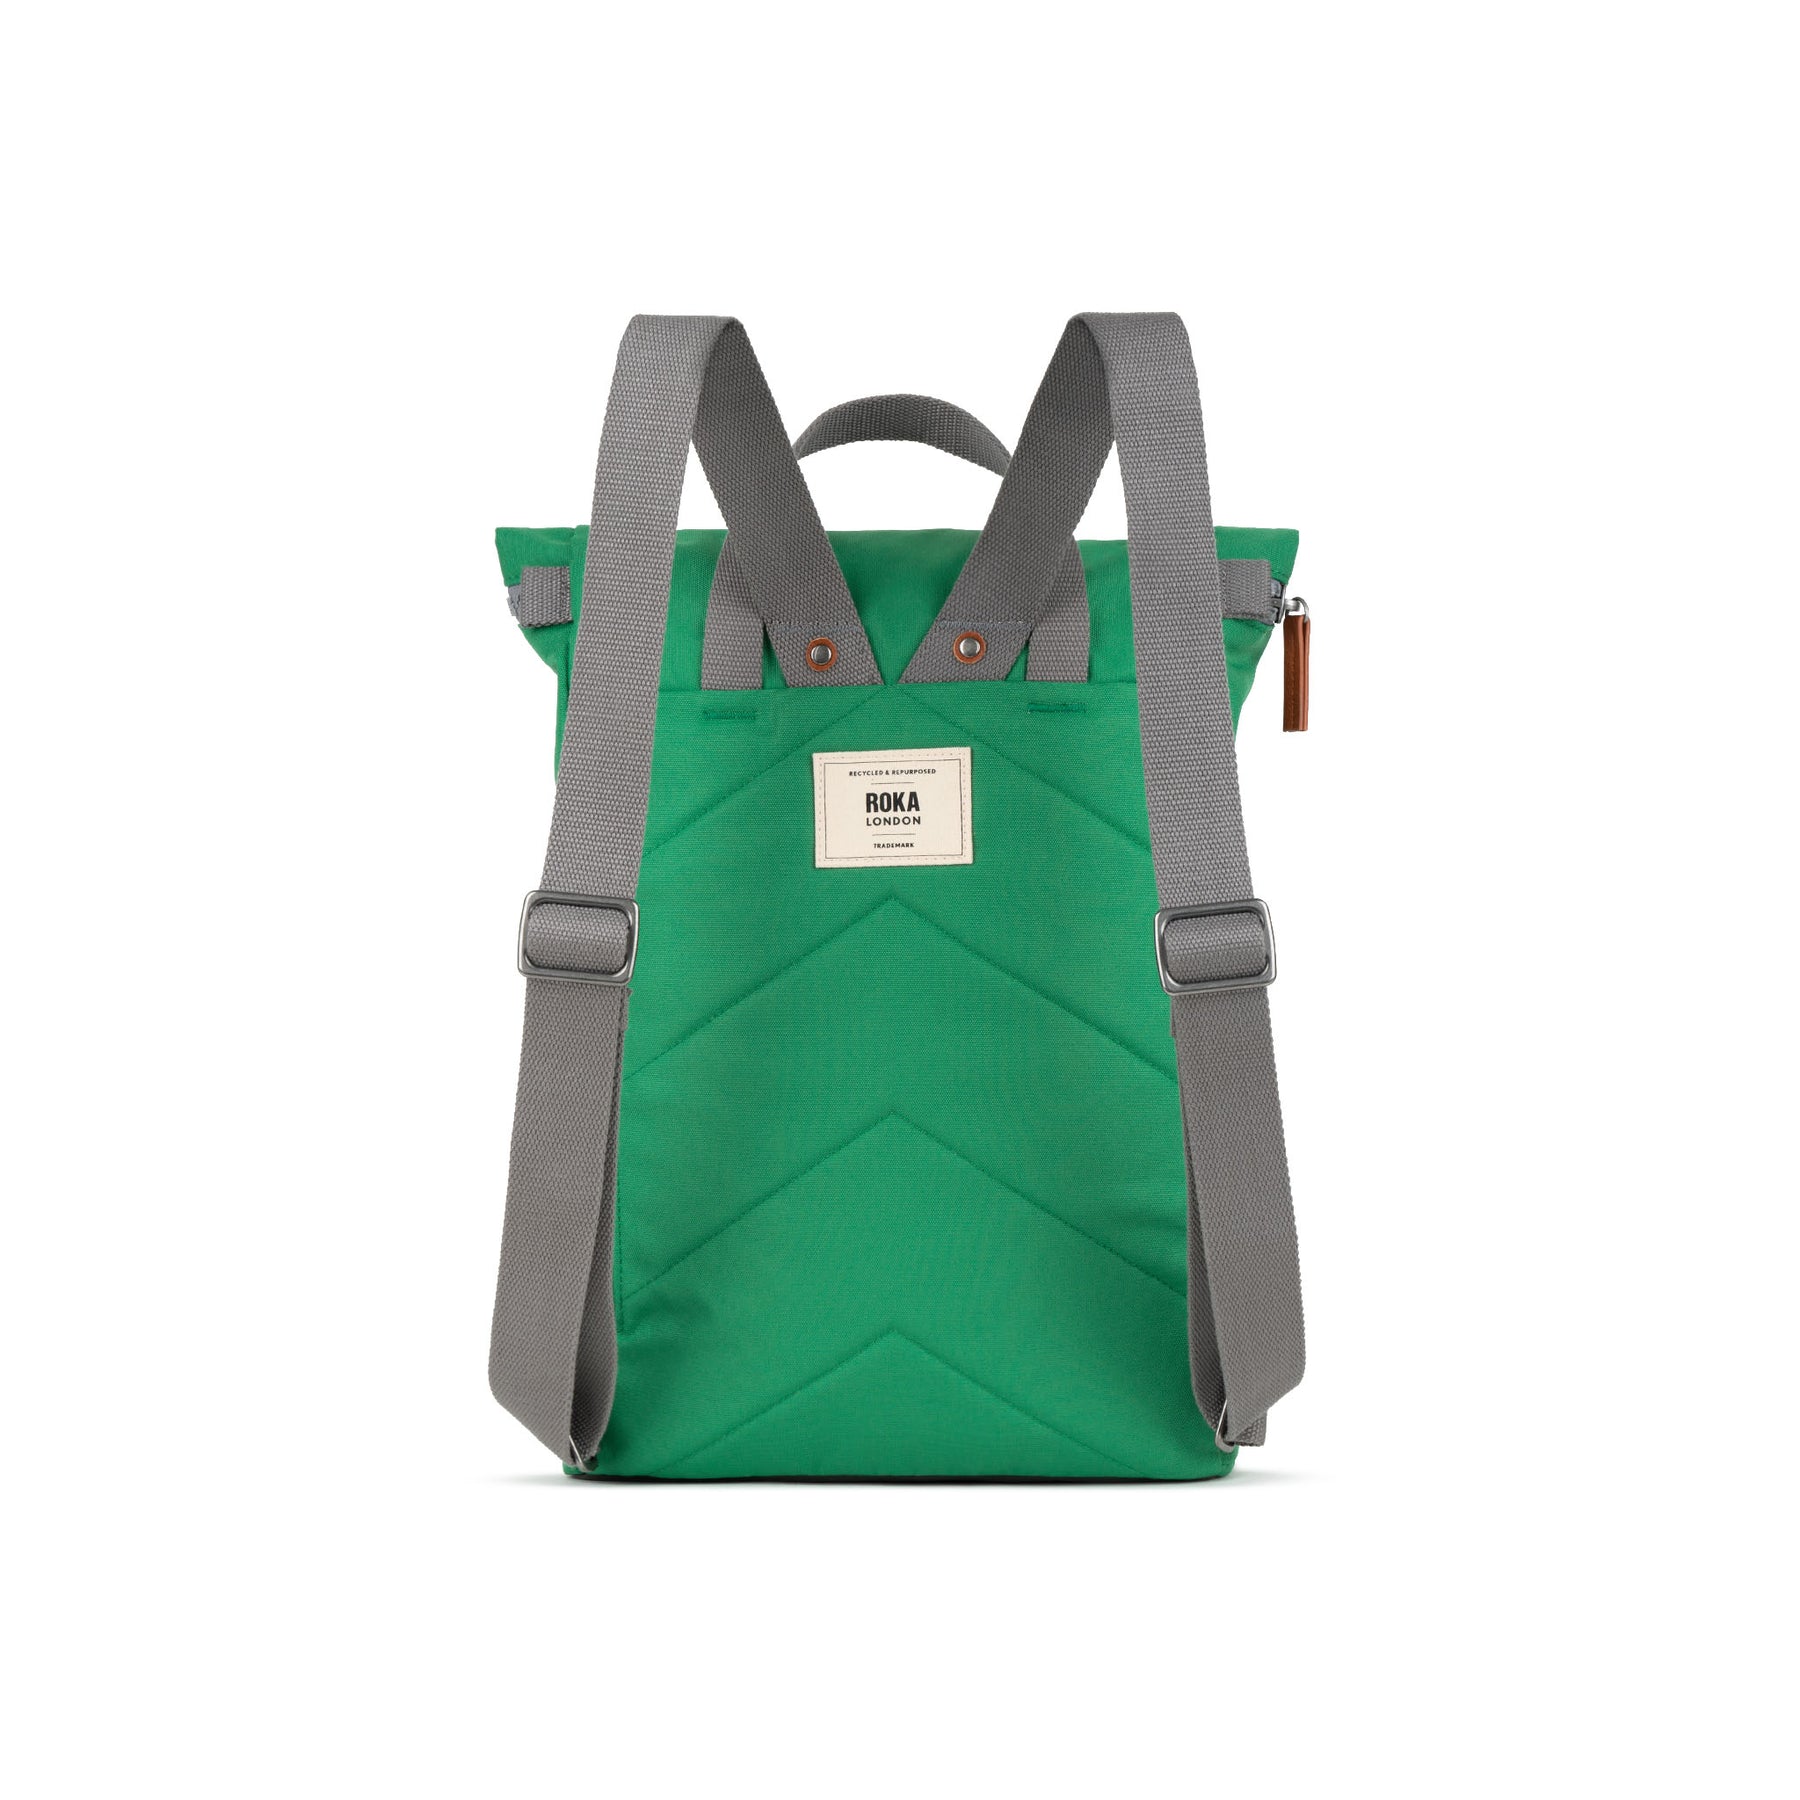 ROKA Finchley A Mountain Green Medium Recycled Canvas Bag